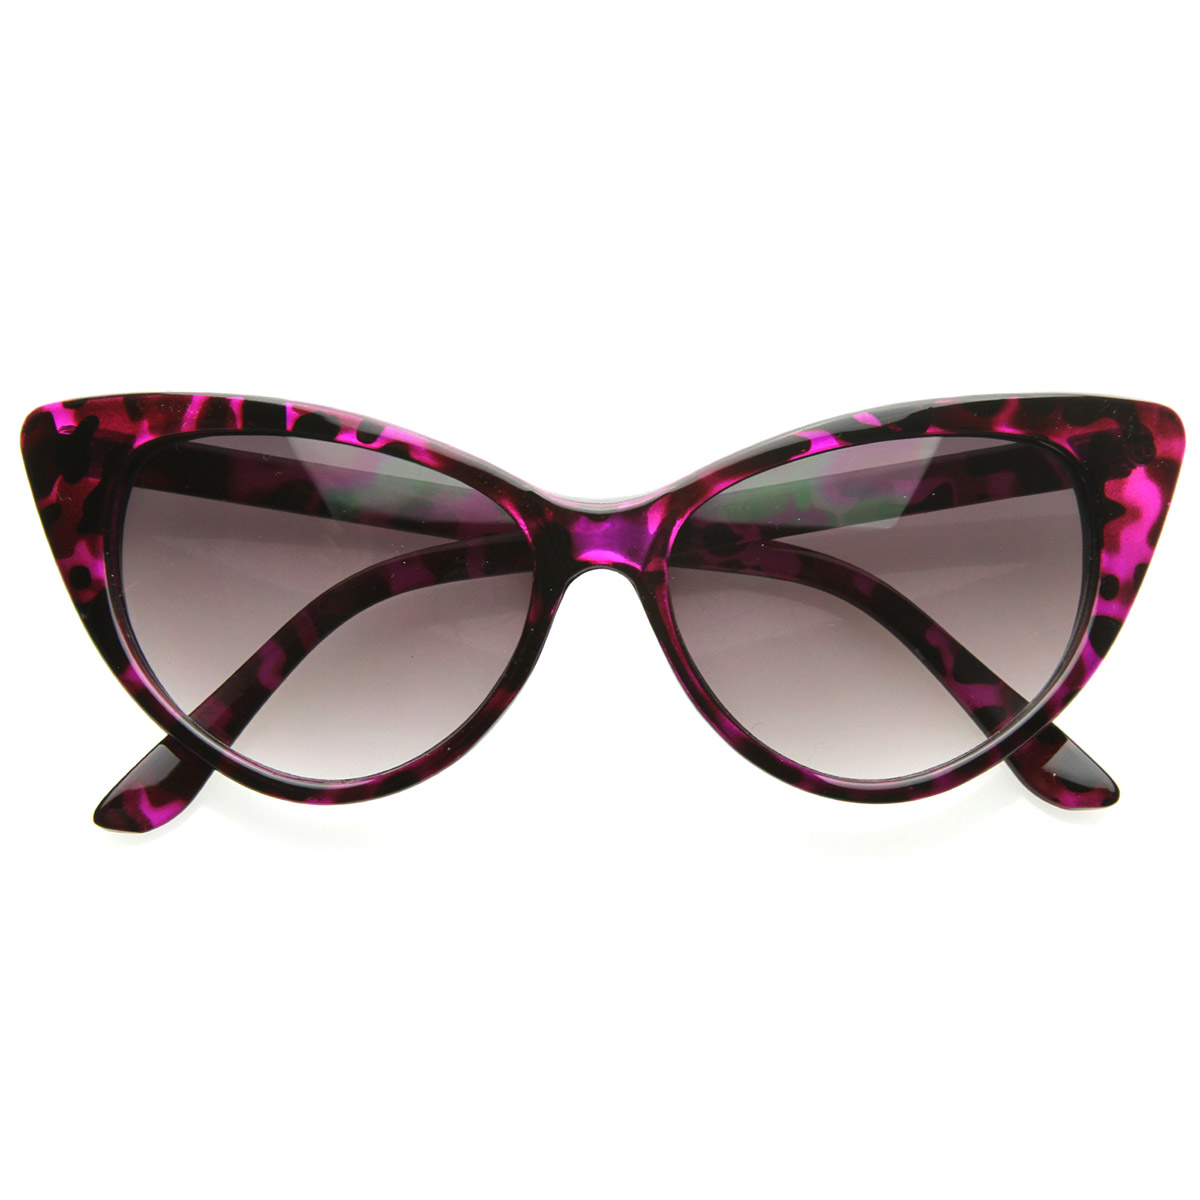 sunglassLA Cateyes Vintage Inspired Fashion Chic High Pointed Cat-Eye ...